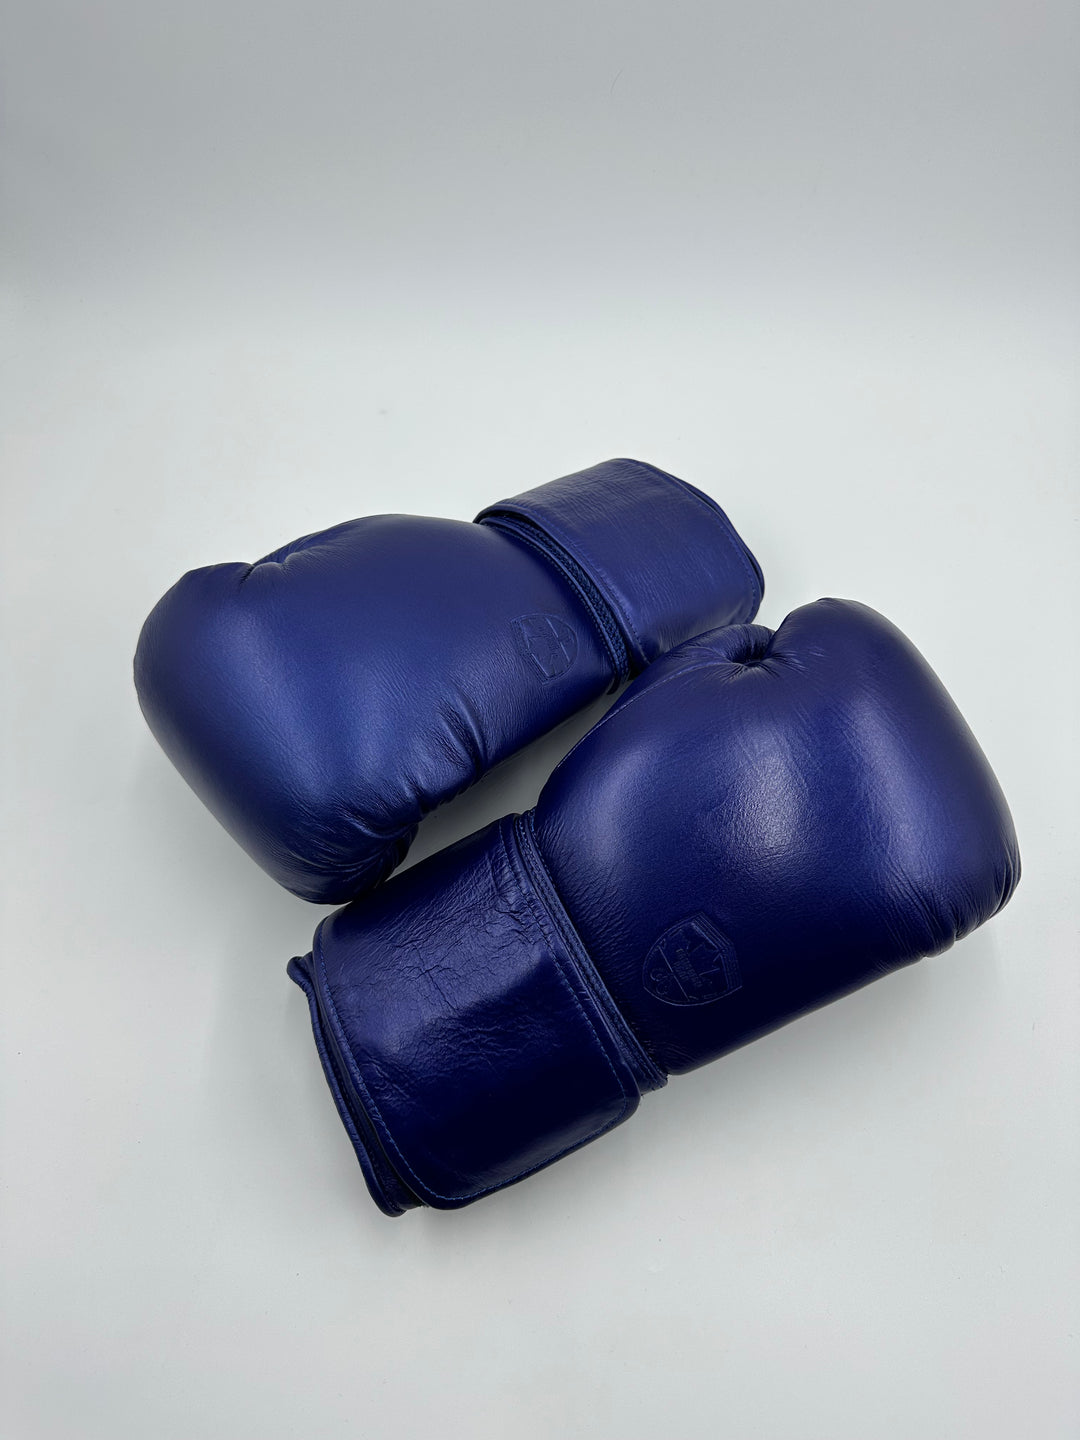 G12000 Boxing Gloves - MIDNIGHT BLUE